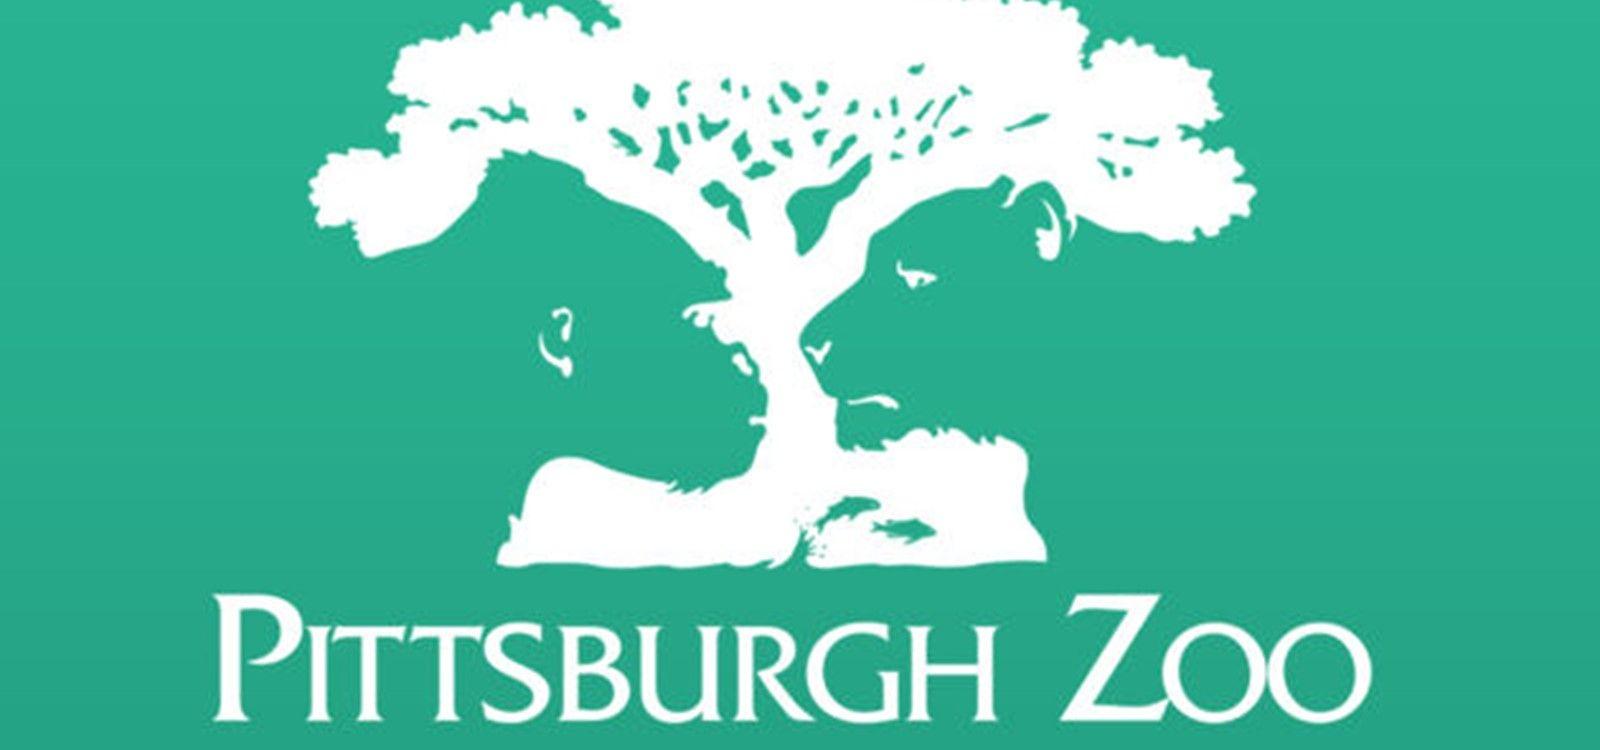 Pittsburgh Zoo Logo - Pittsburgh Zoo & PPG Aquarium Noon Year's Eve. Pittsburgh